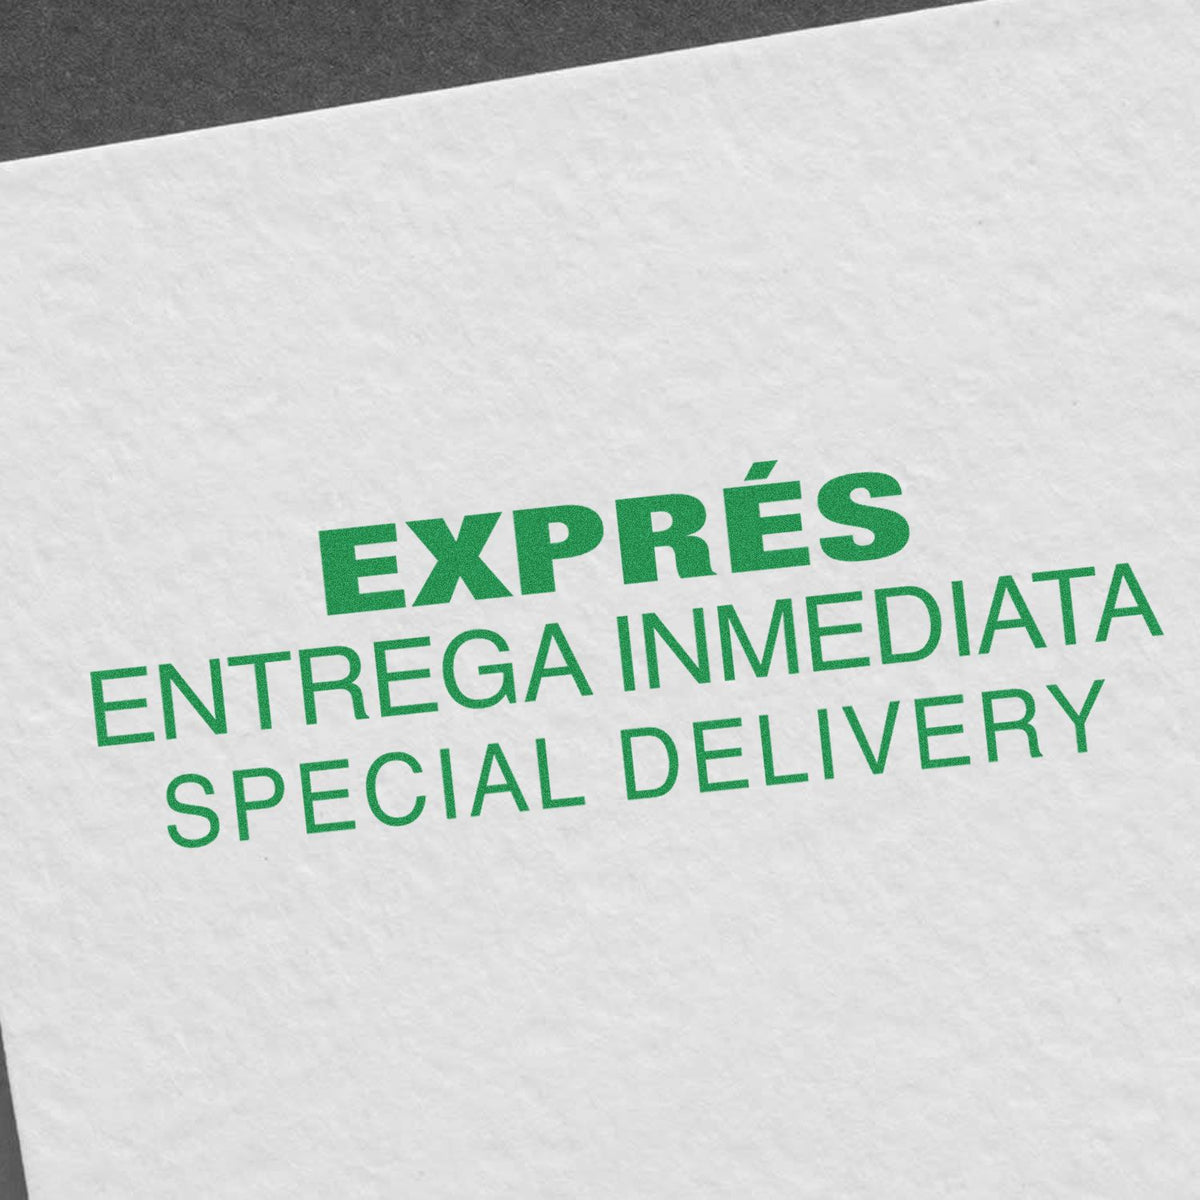 Expres Entrega Inmedia Rubber Stamp In Use